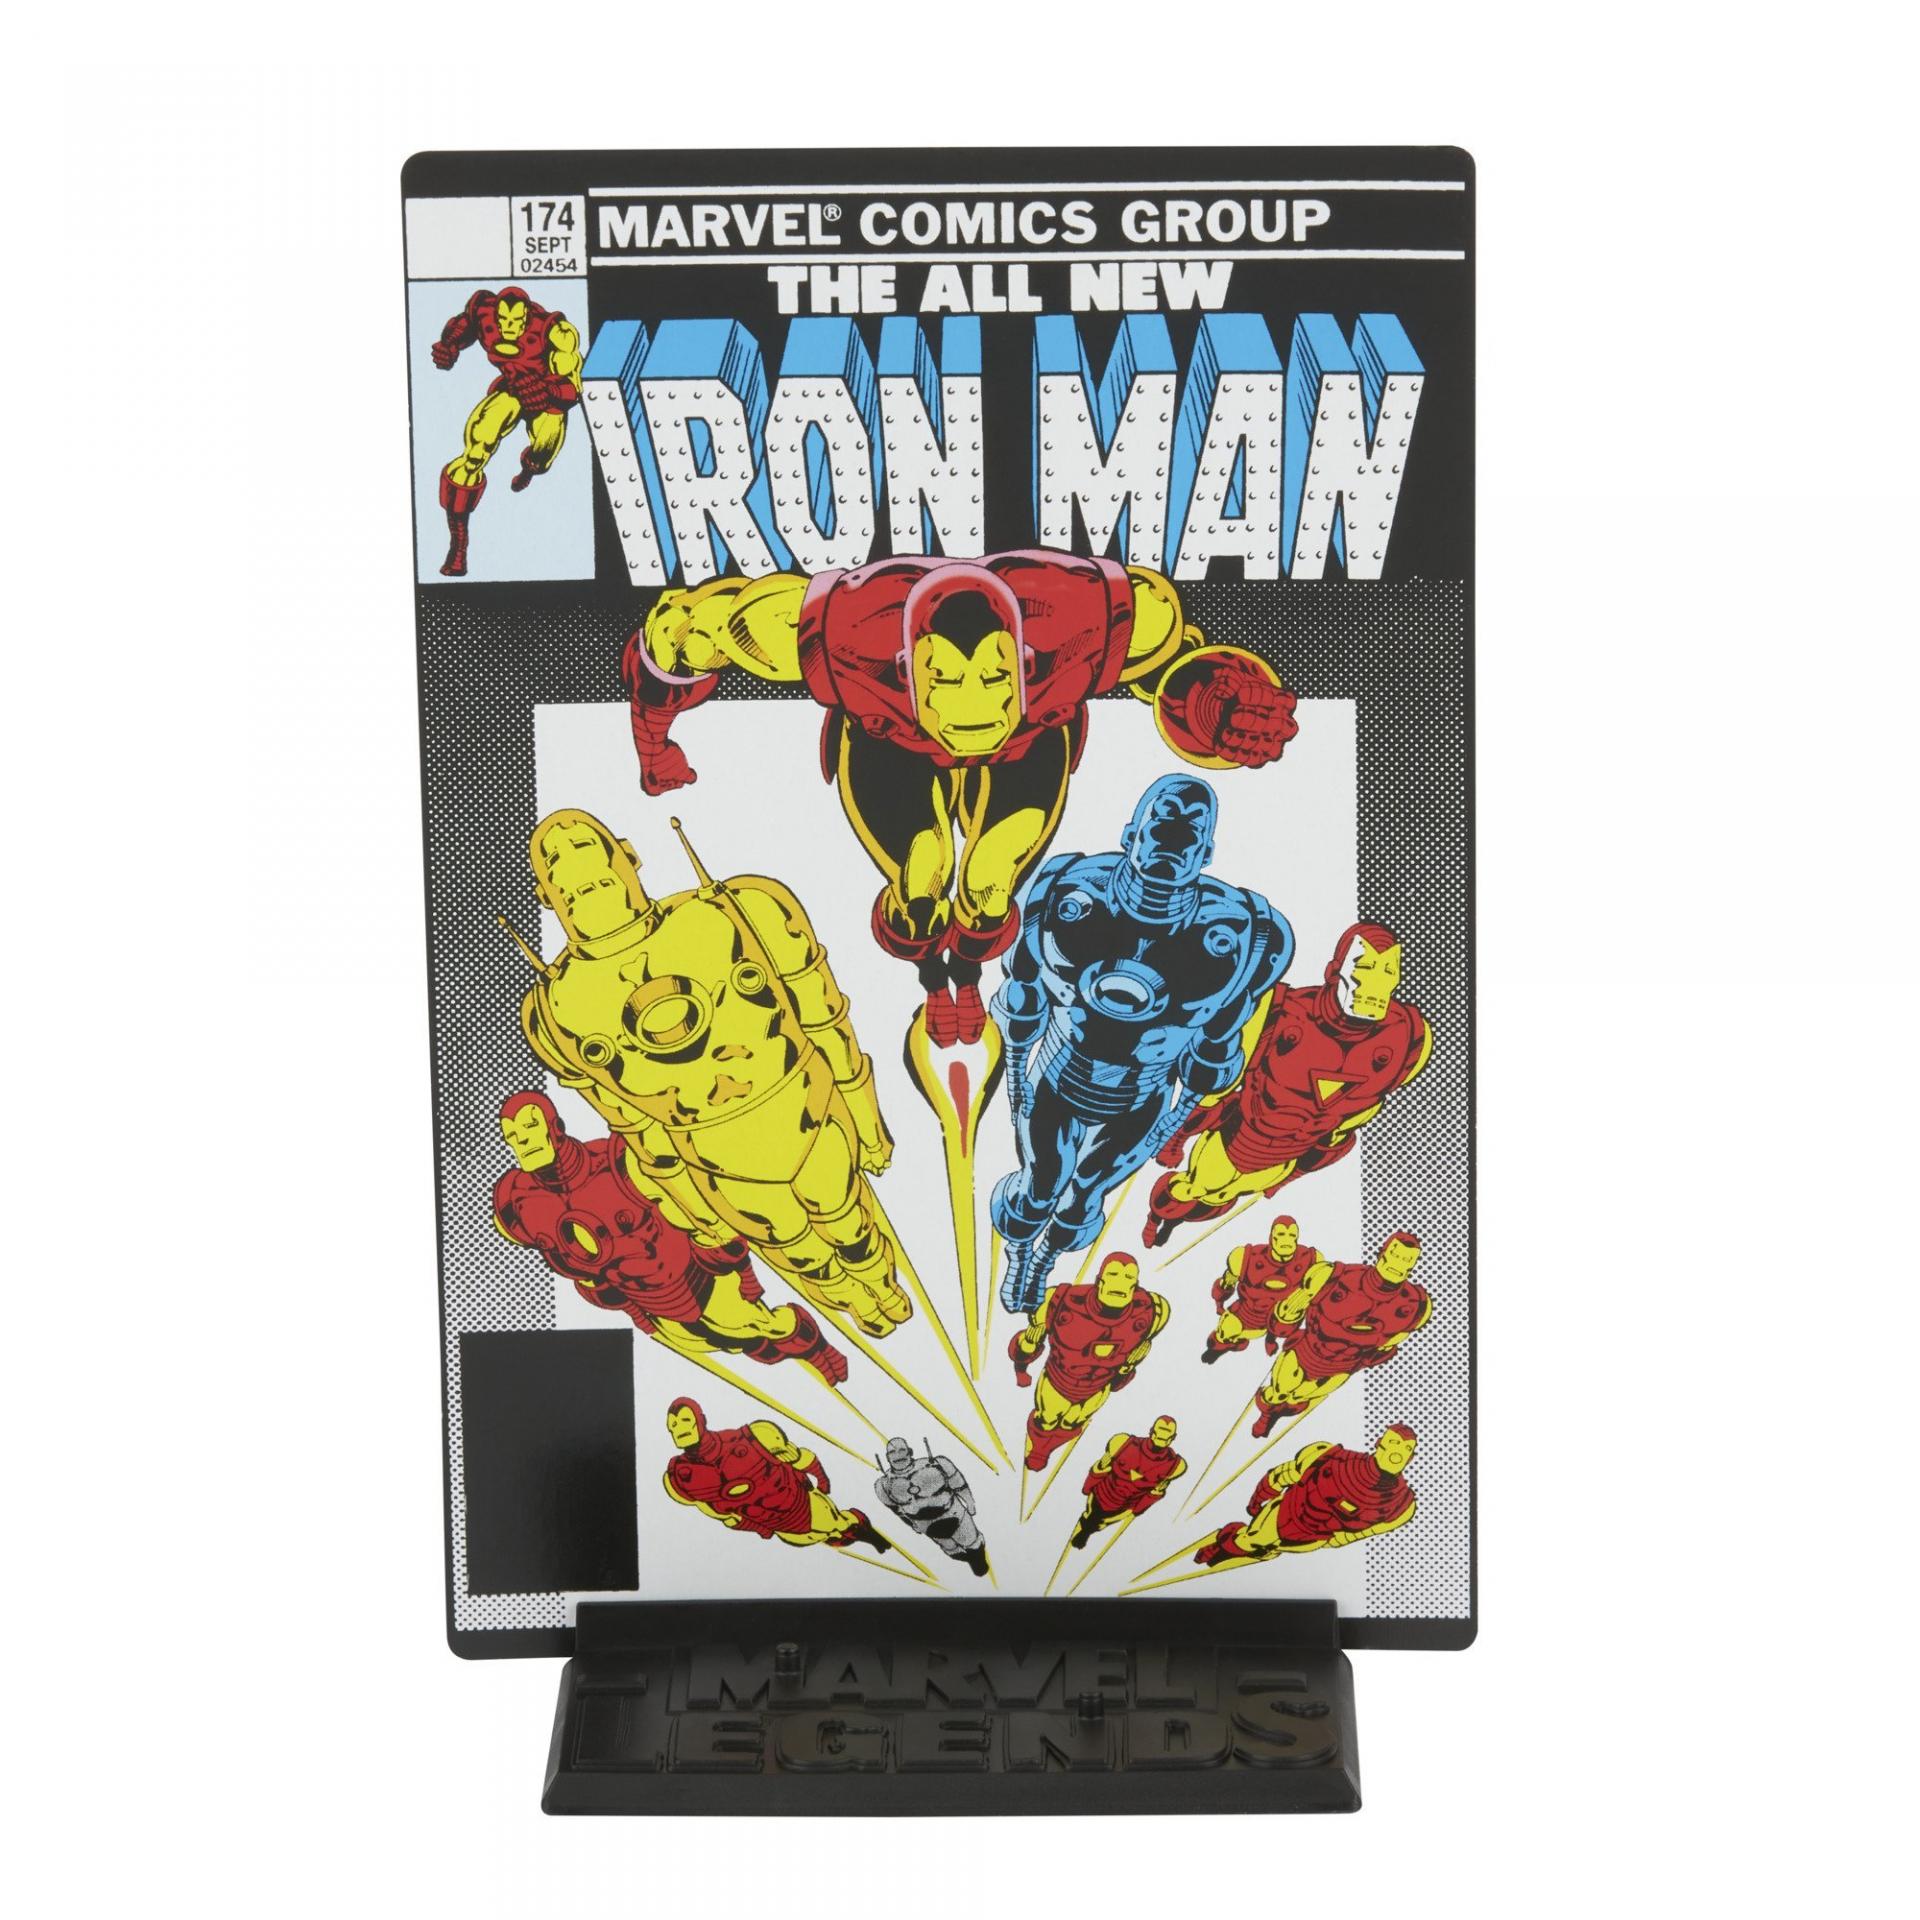 Marvel legends series 1 hasbro iron man12